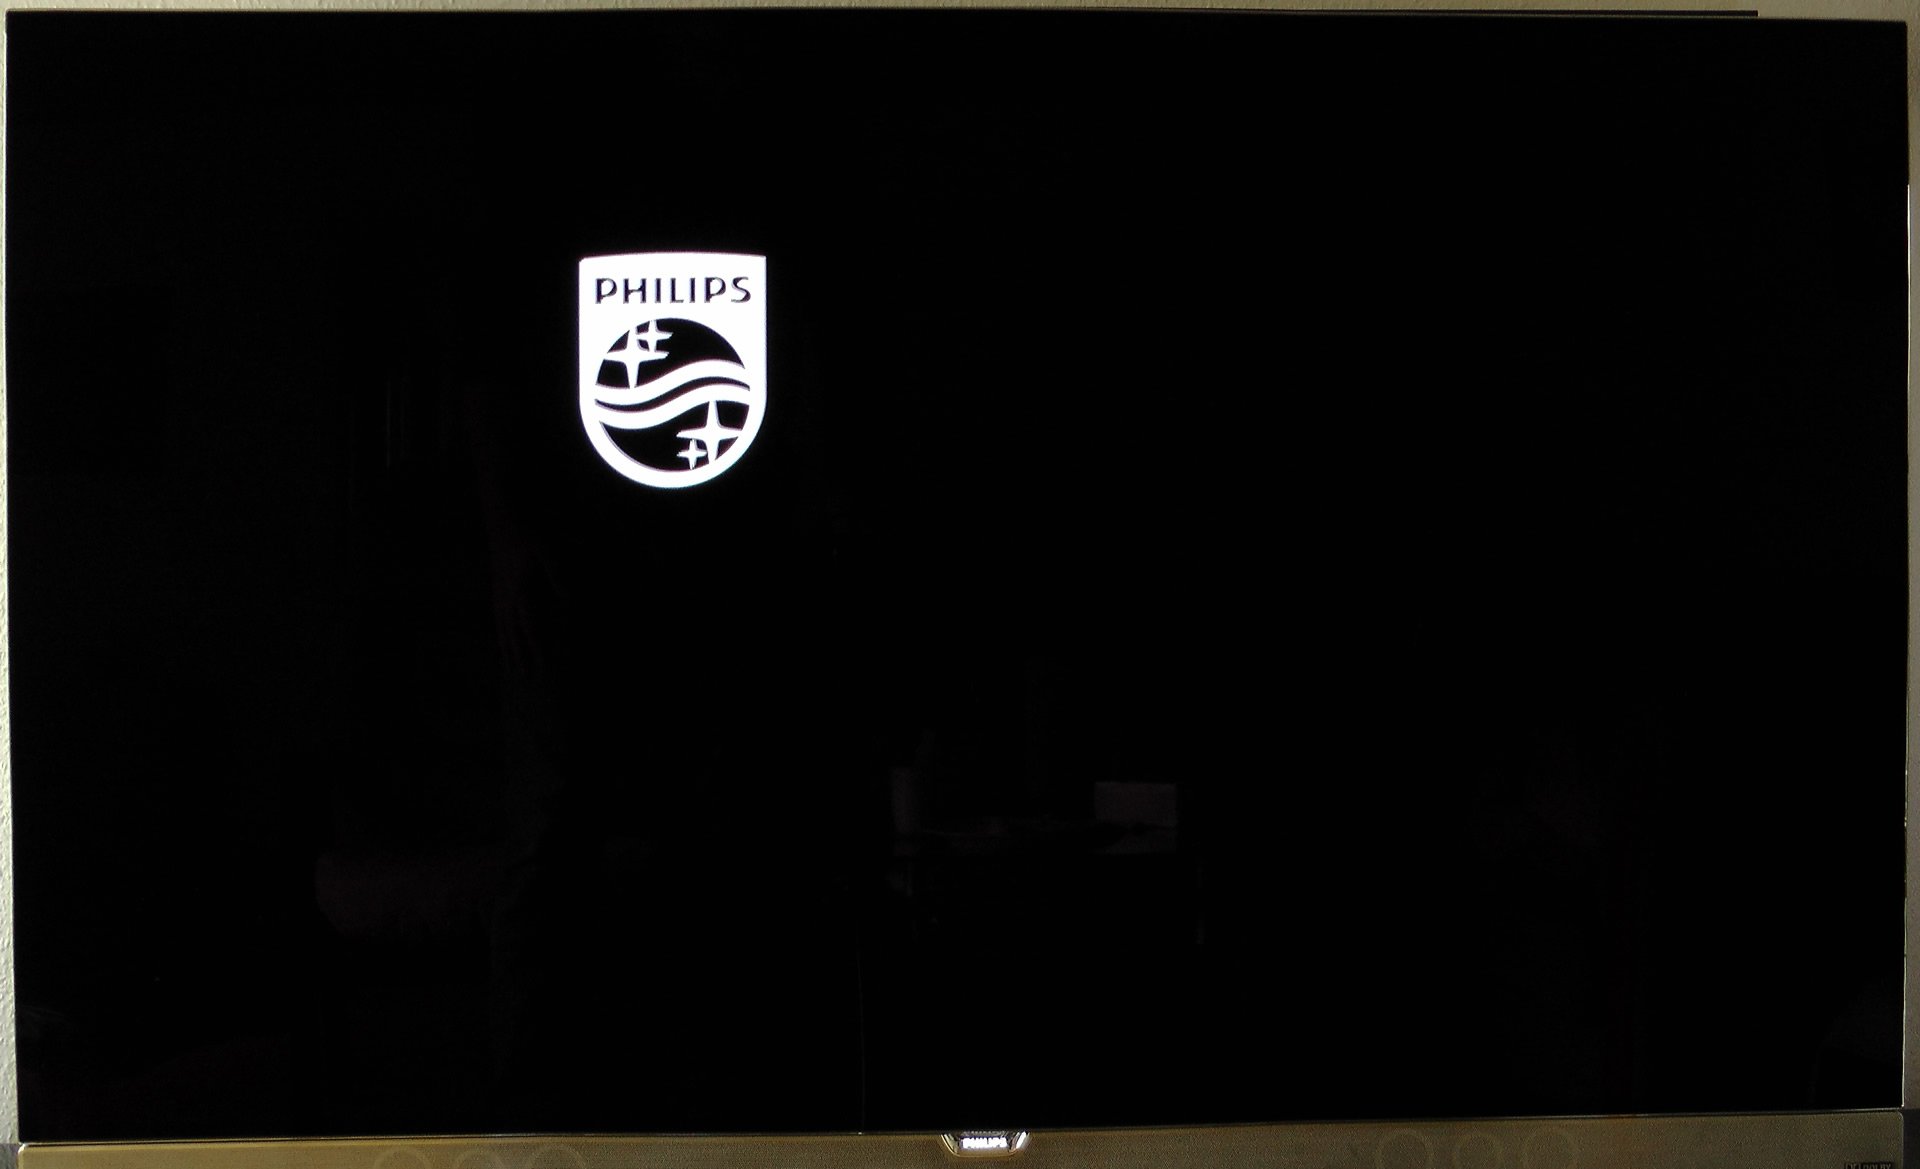 Philips 55POS901F logo sort baggrund